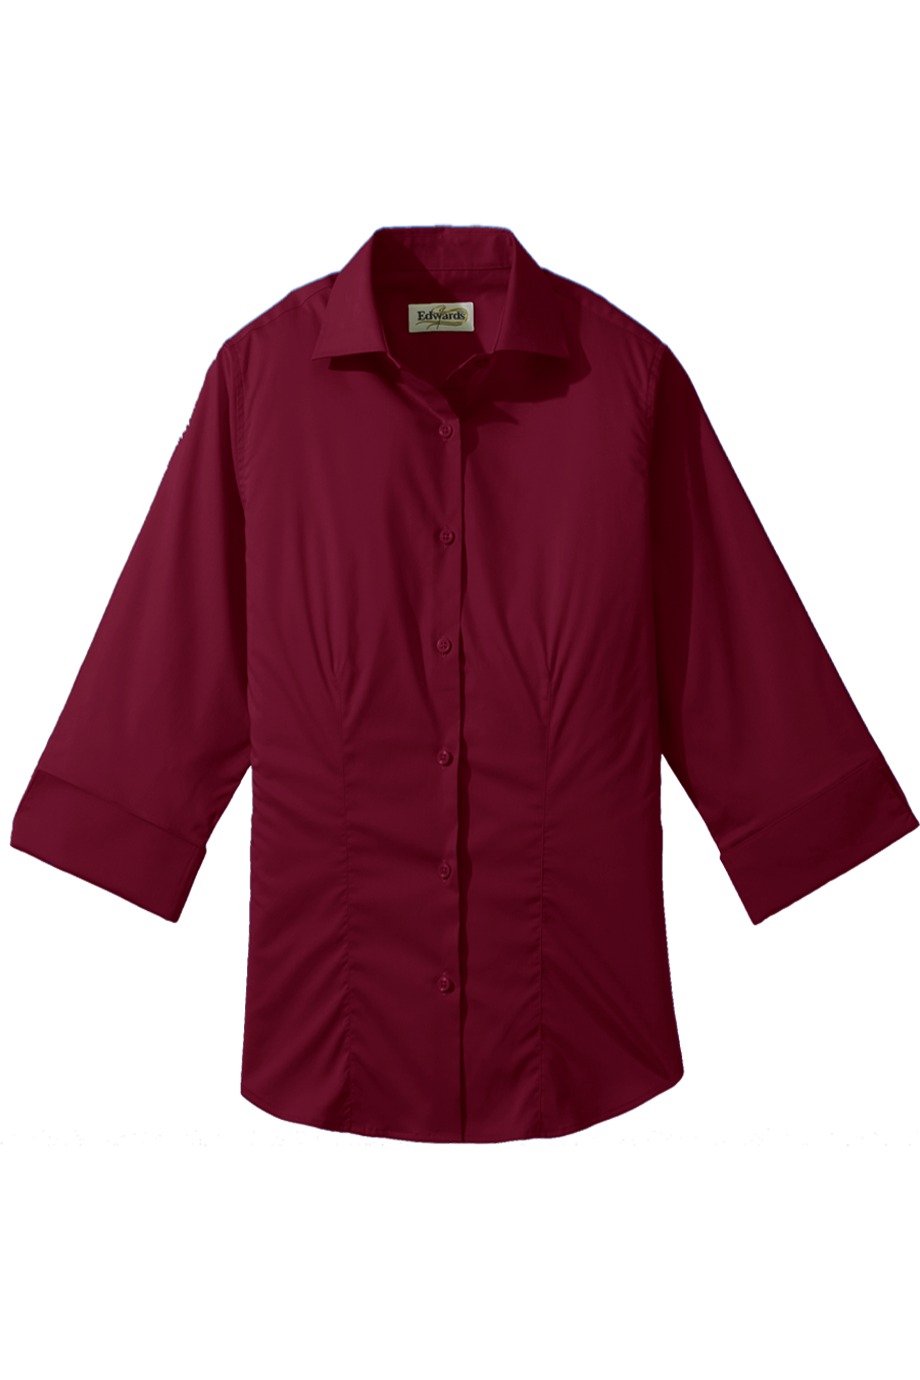 Edwards Garment 5033 - Women's Tailored Three Quarter Stretch Blouse